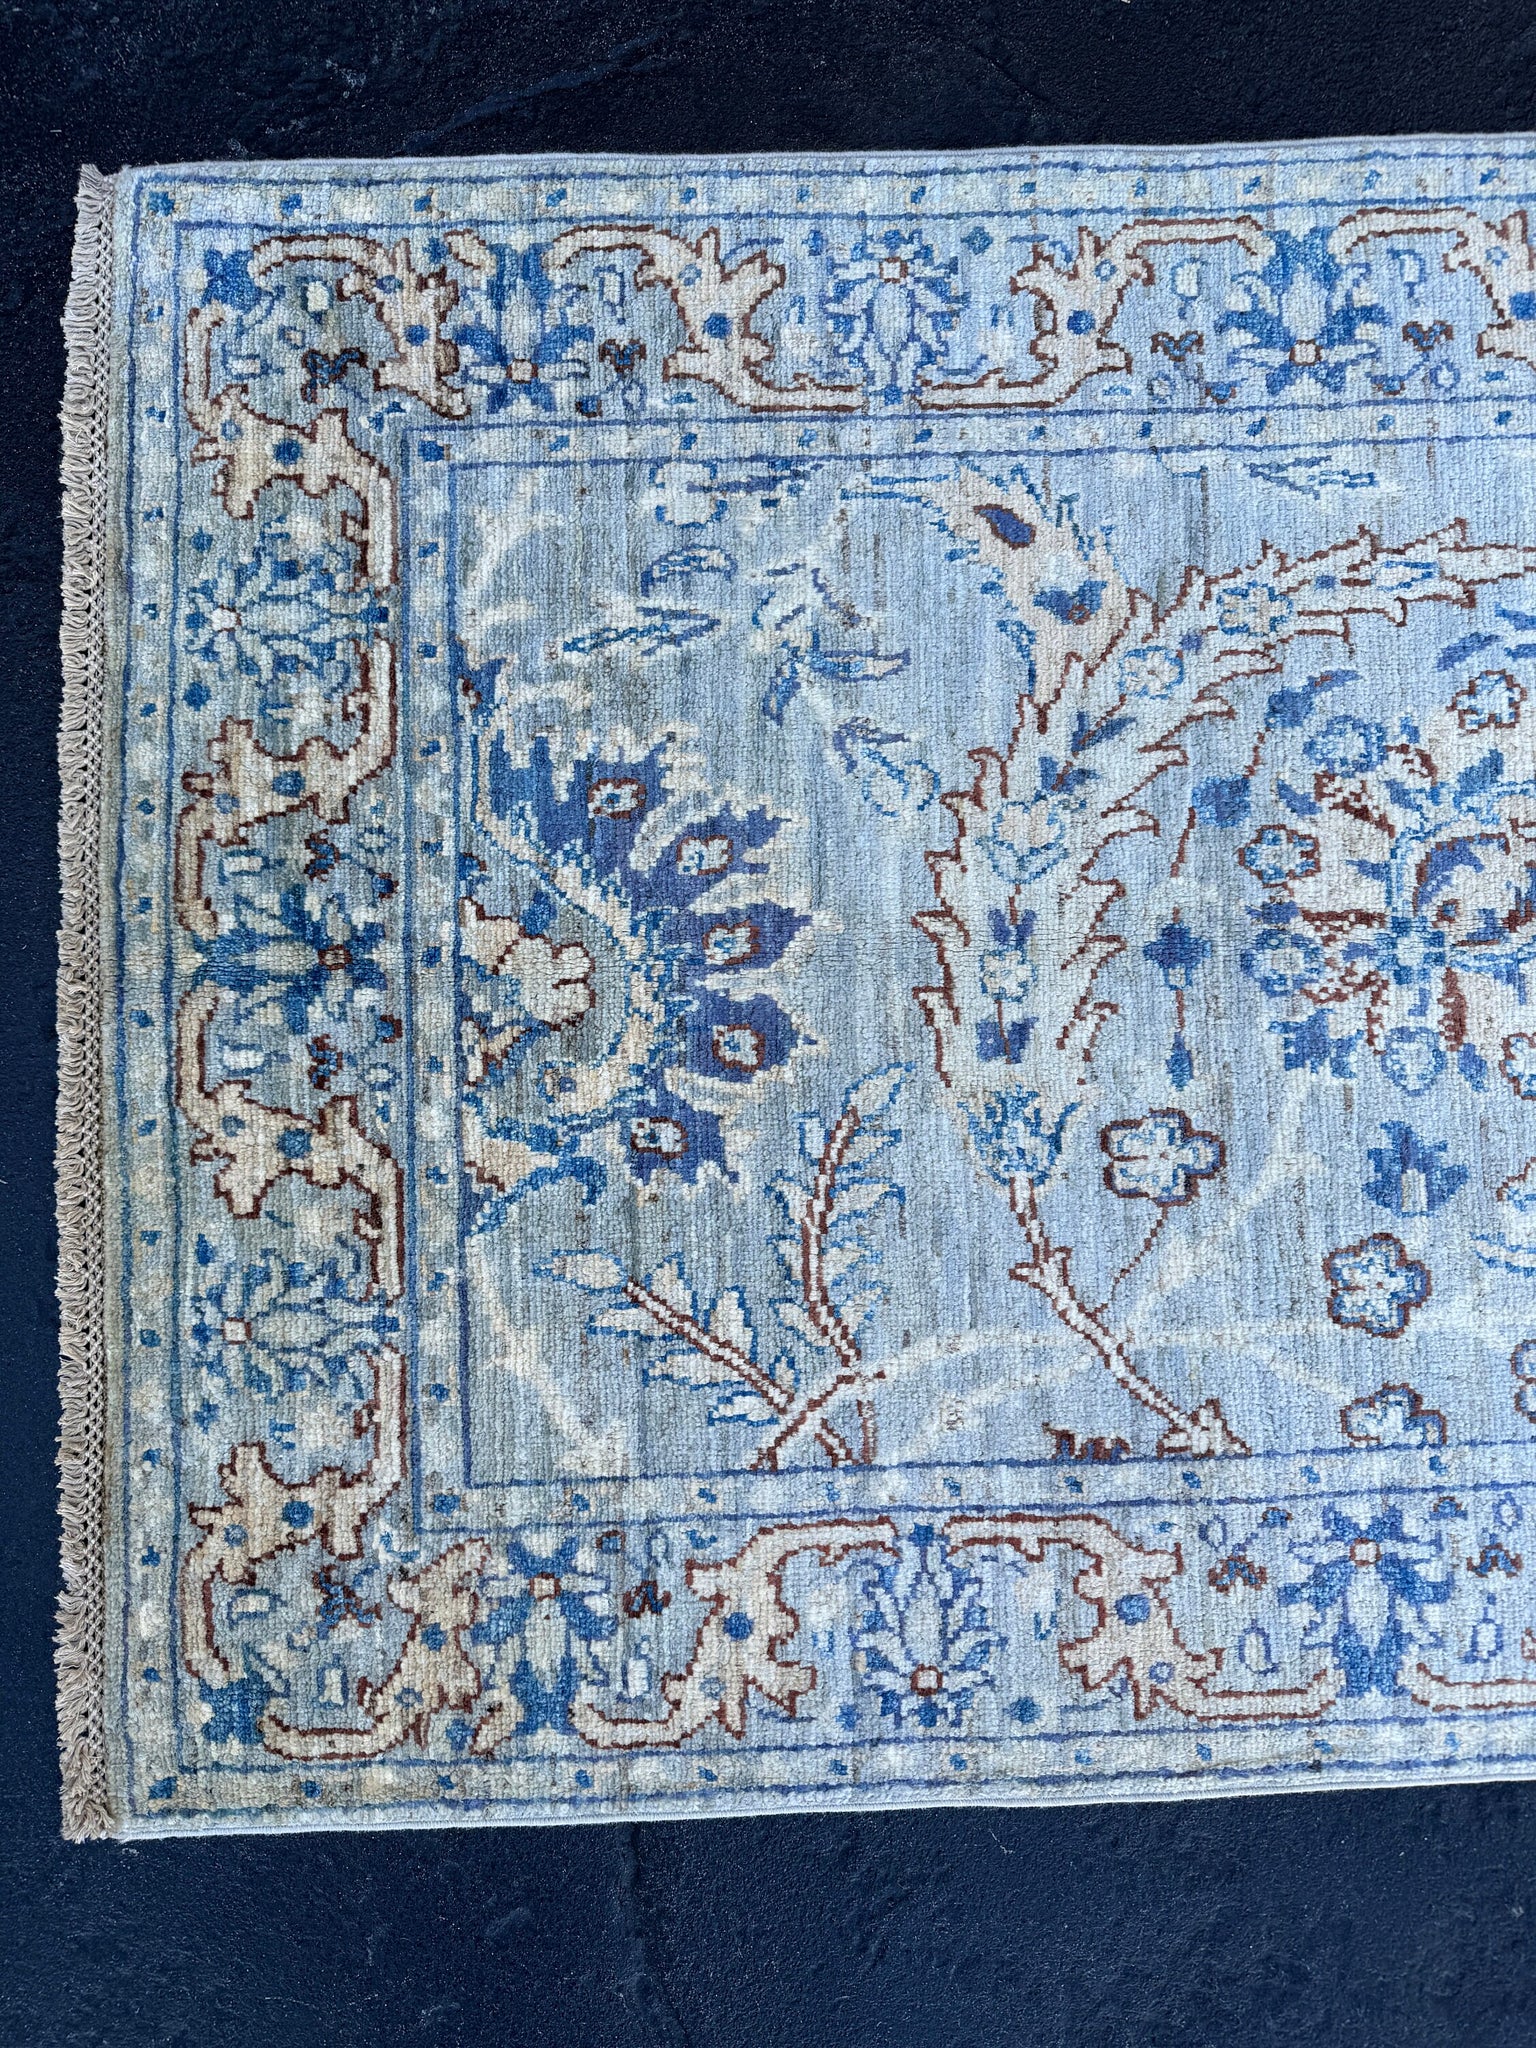 3x10 (91x304) Handmade Afghan Runner Rug | Powder Baby Denim Navy Blue Cream Taupe Sand Rust Orange | Wool Floral Hand Knotted